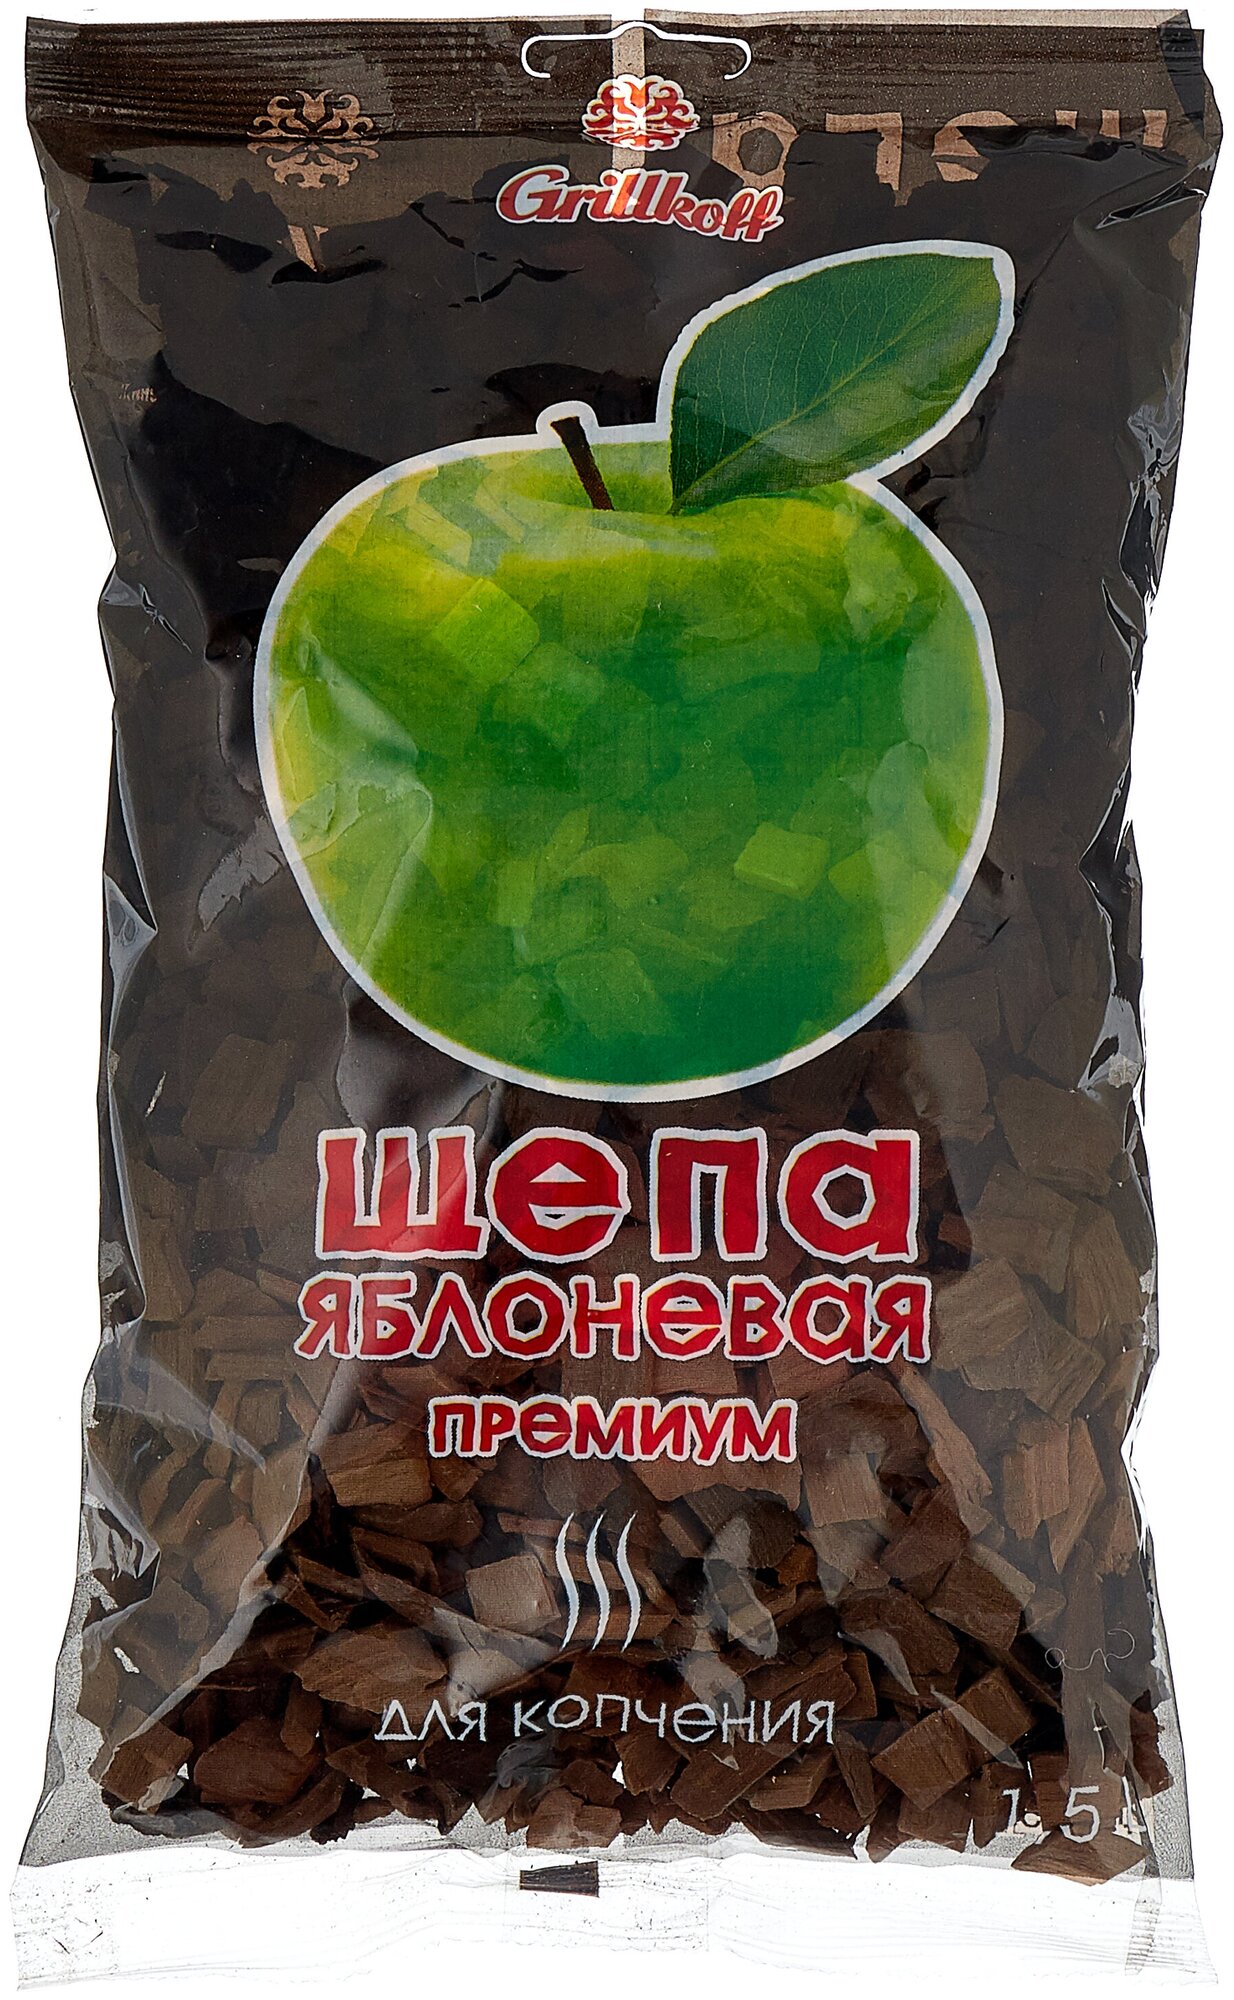 Grillkoff Щепа для копчения «Премиум», яблоня, 1.5 л, 0.25 кг, 1.5 л